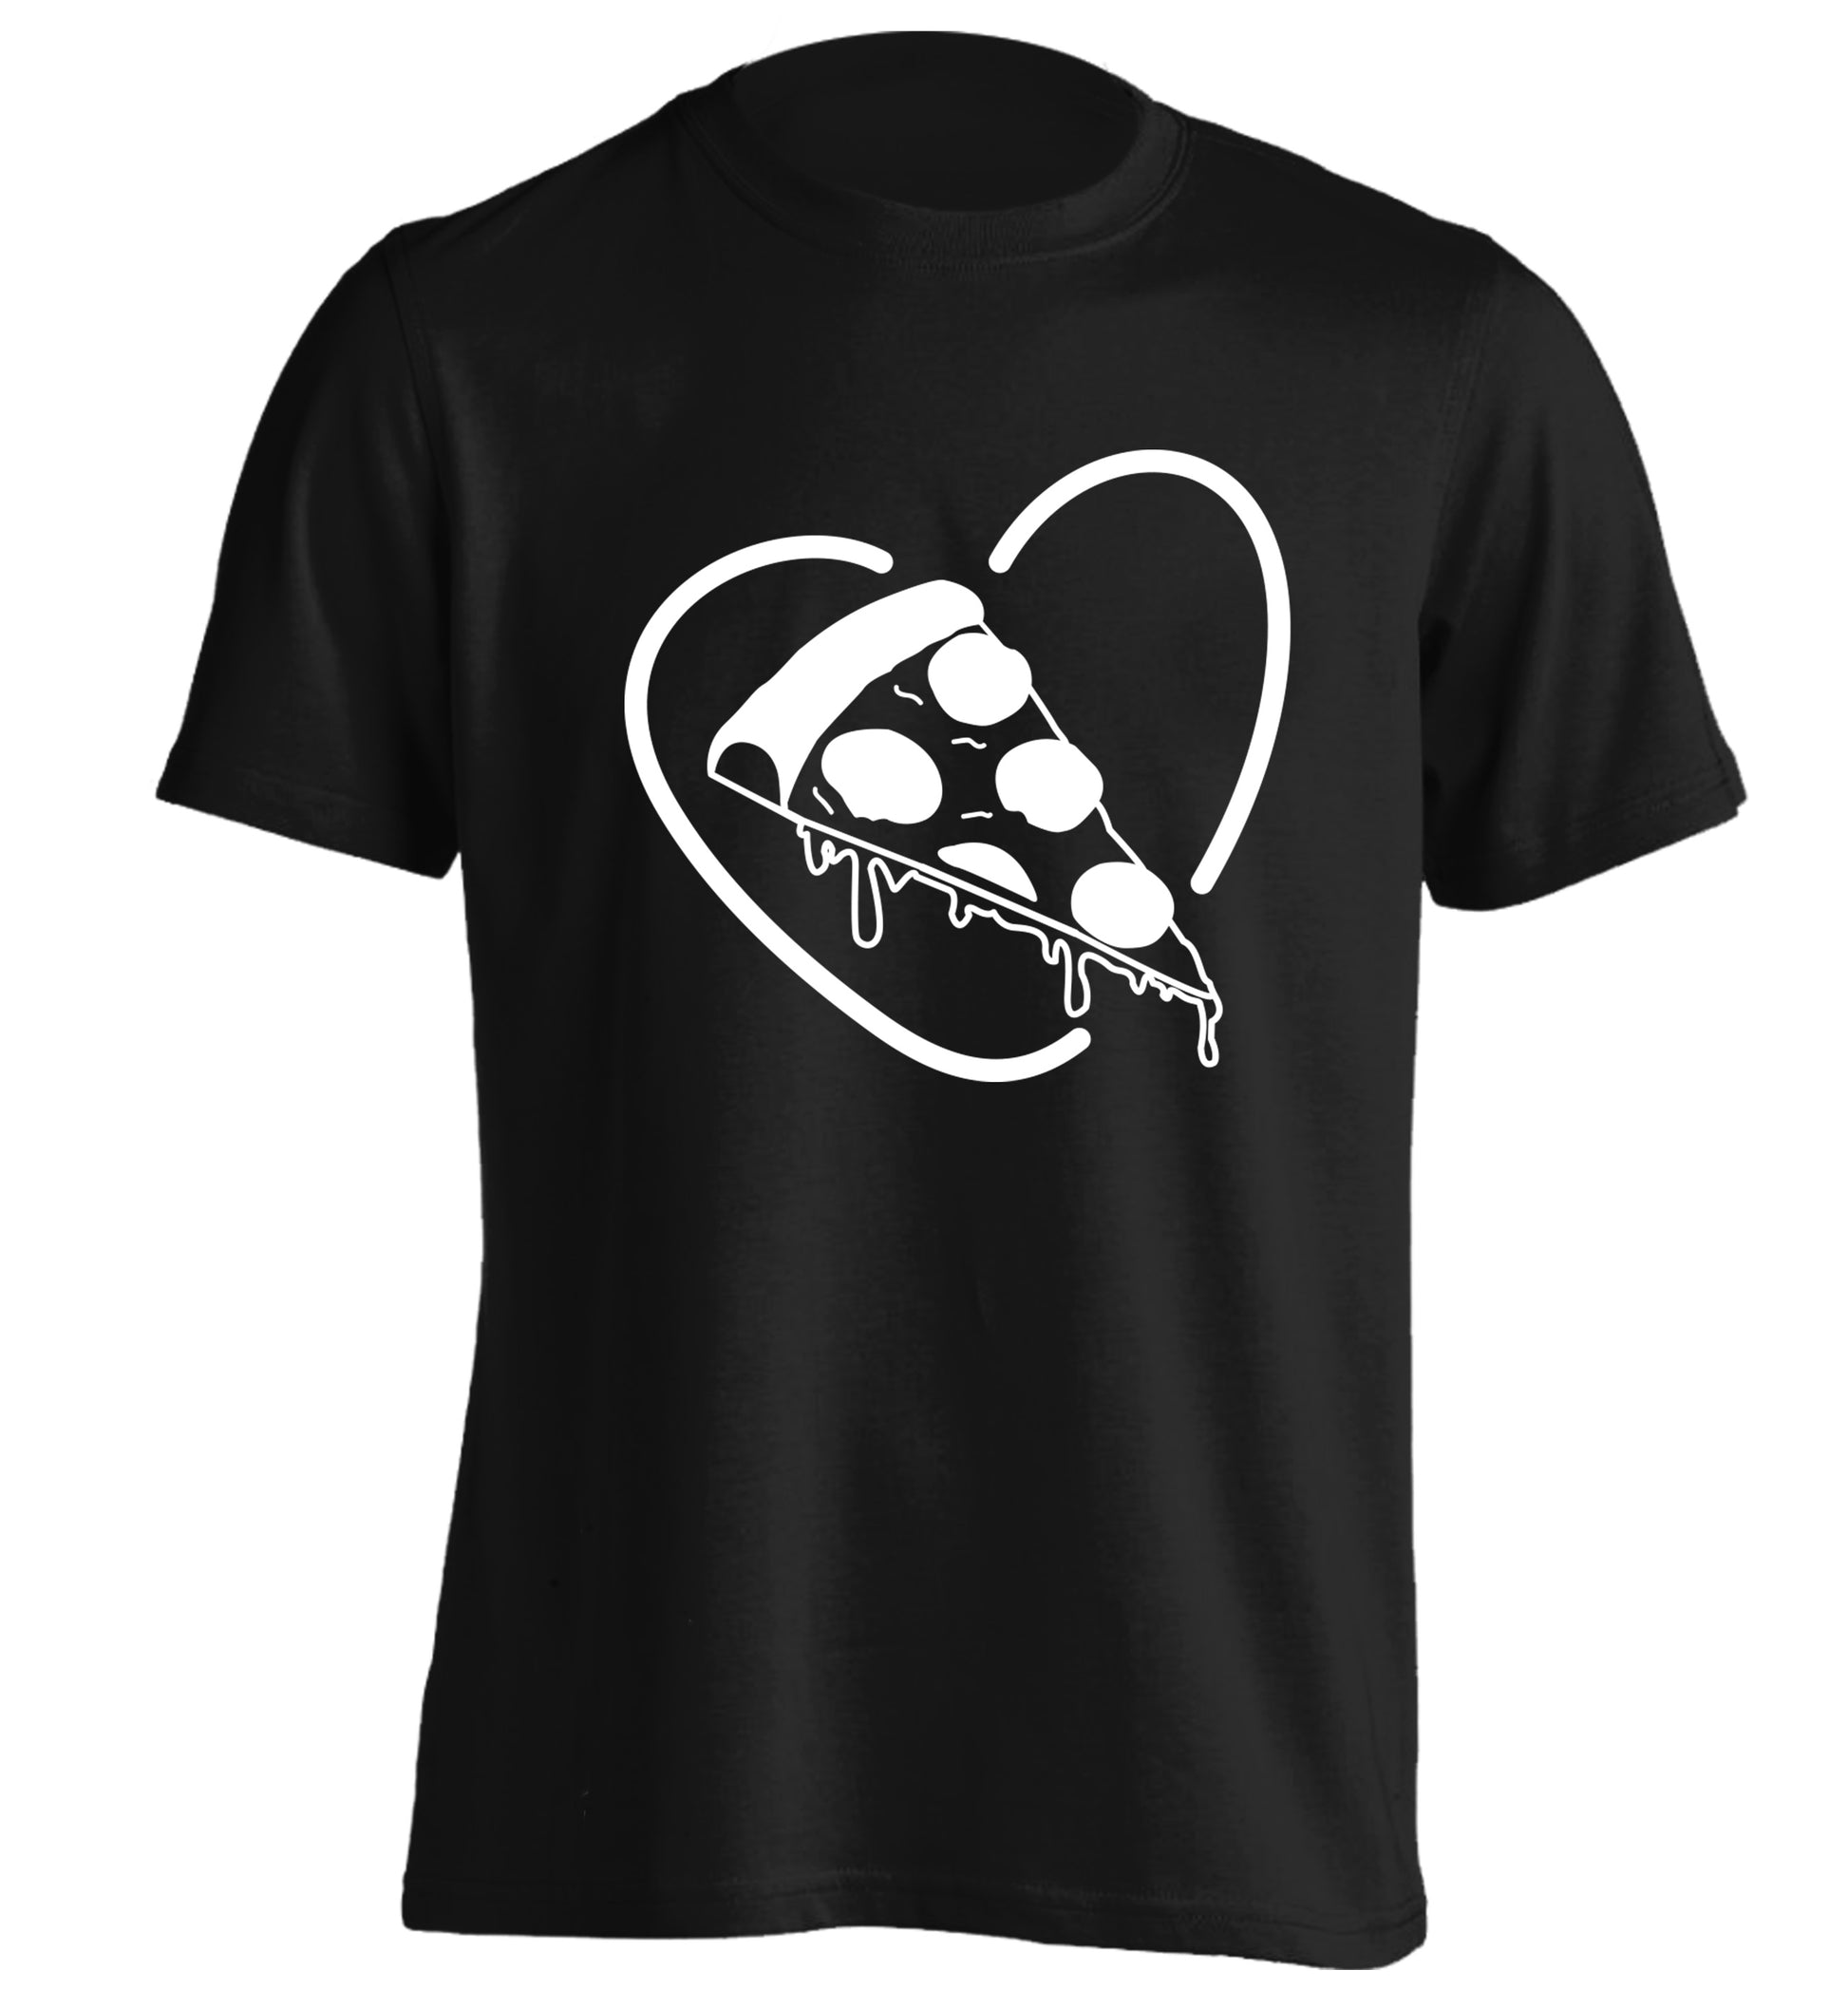 Pizza heart adults unisex black Tshirt 2XL